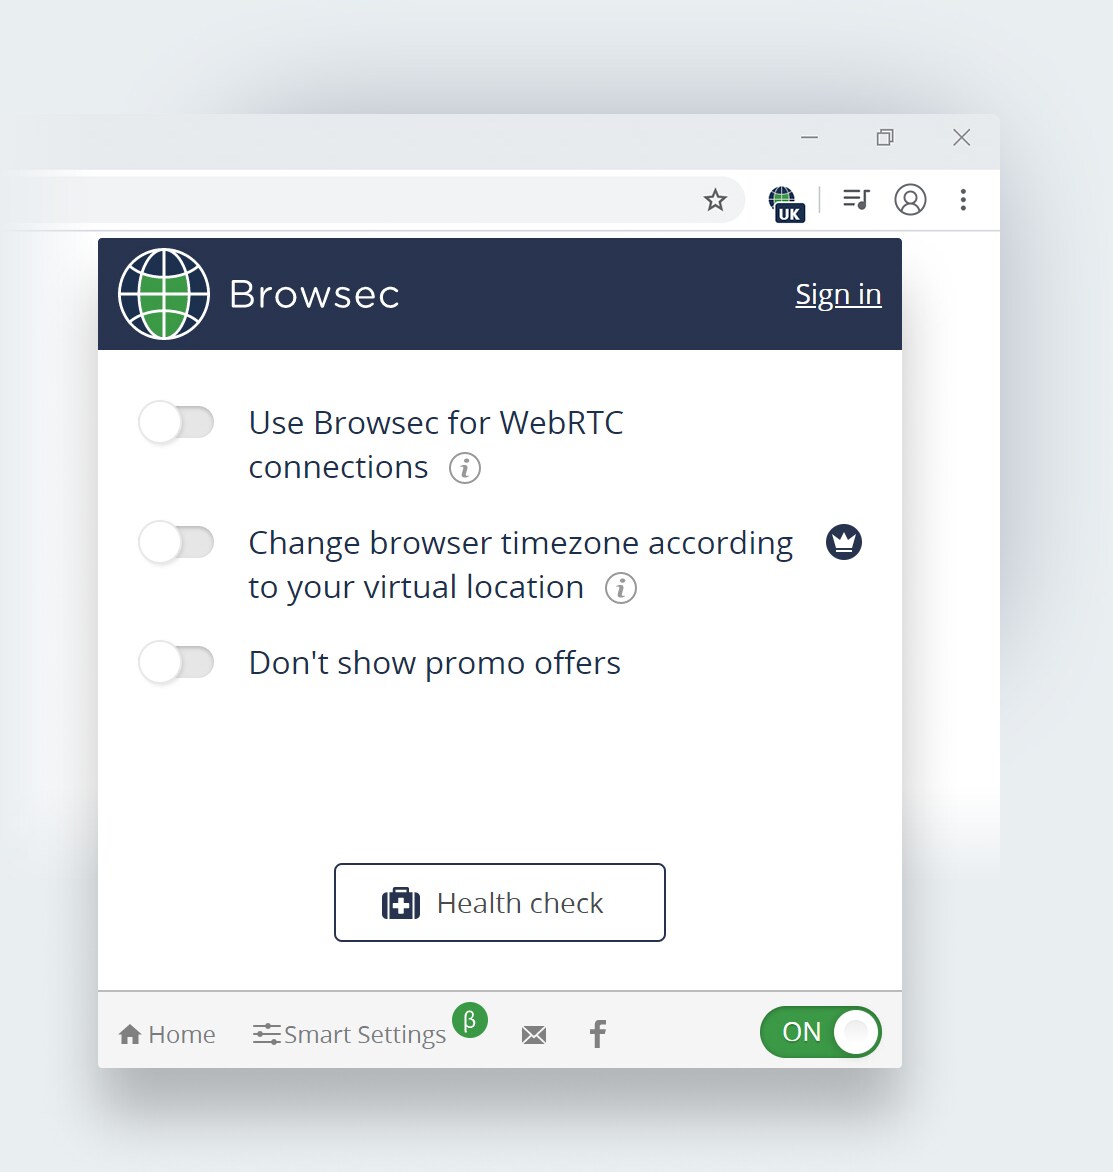 Browsec VPN 3.80.3 download the new